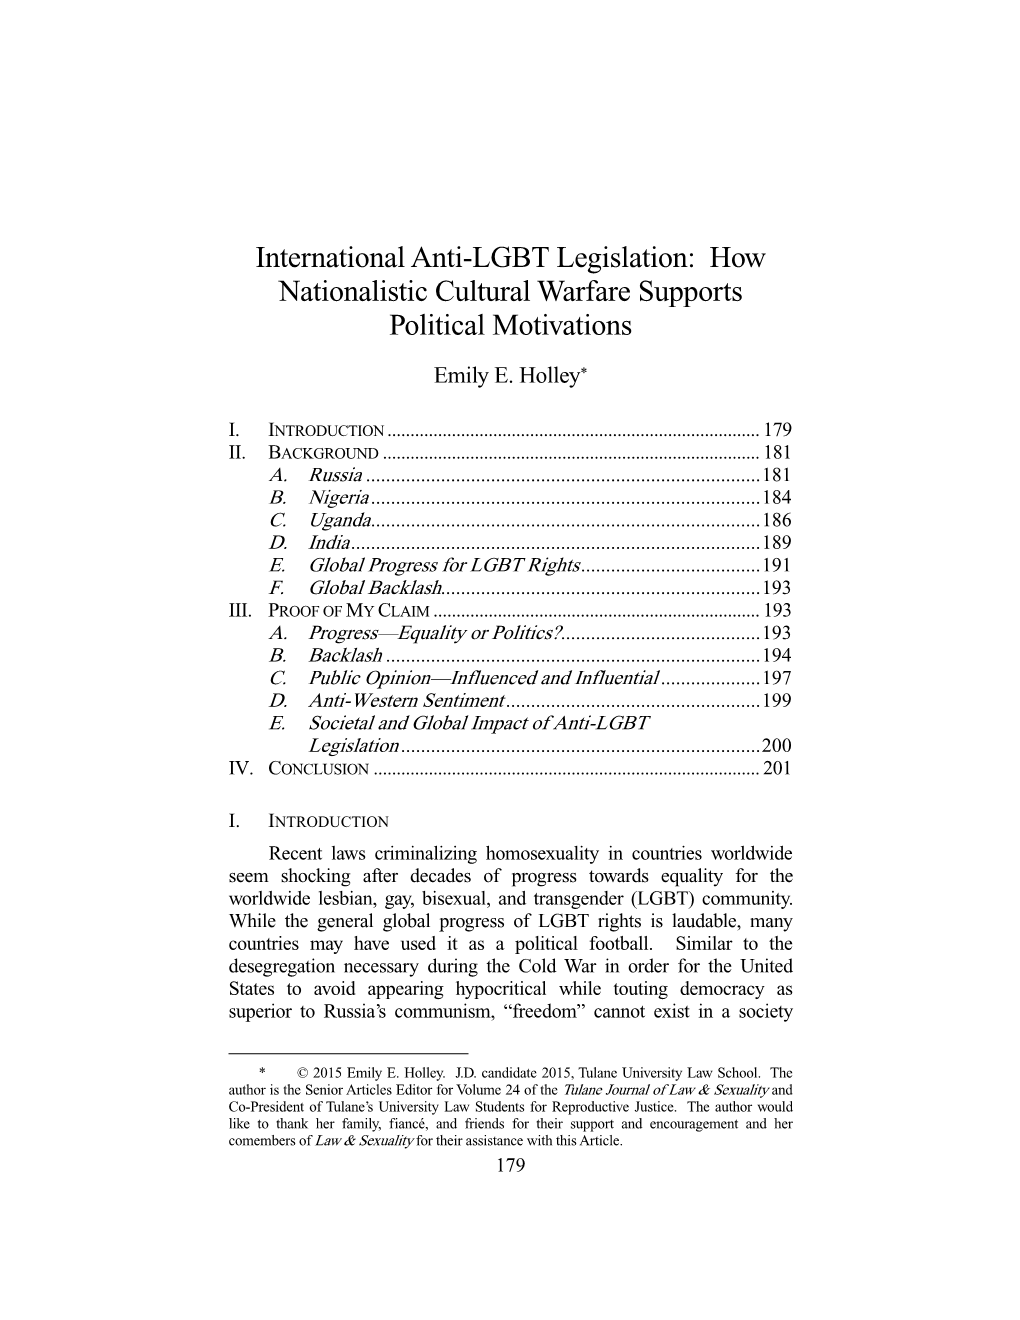 International Anti-LGBT Legislation: How Nationalistic Cultural Warfare Supports Political Motivations